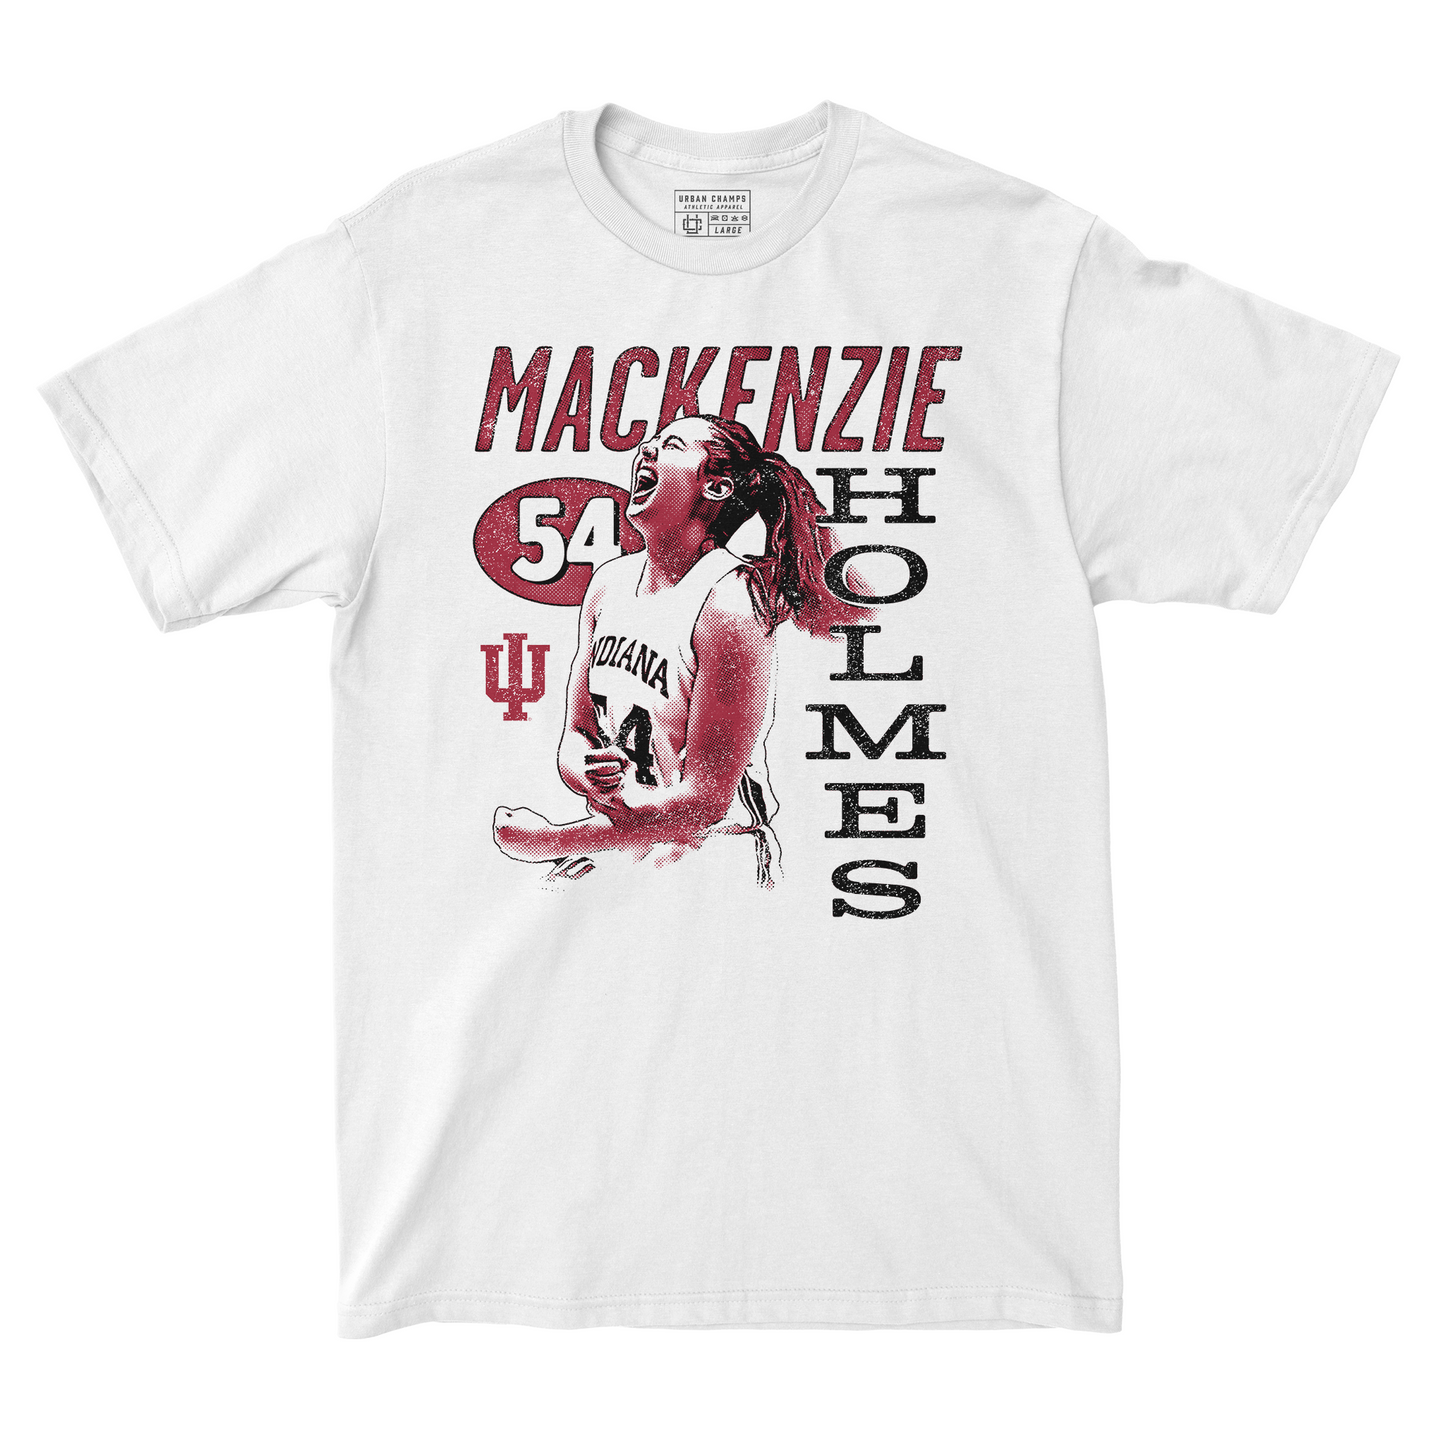 EXCLUSIVE DROP: Mackenzie Holmes Vintage T-Shirt